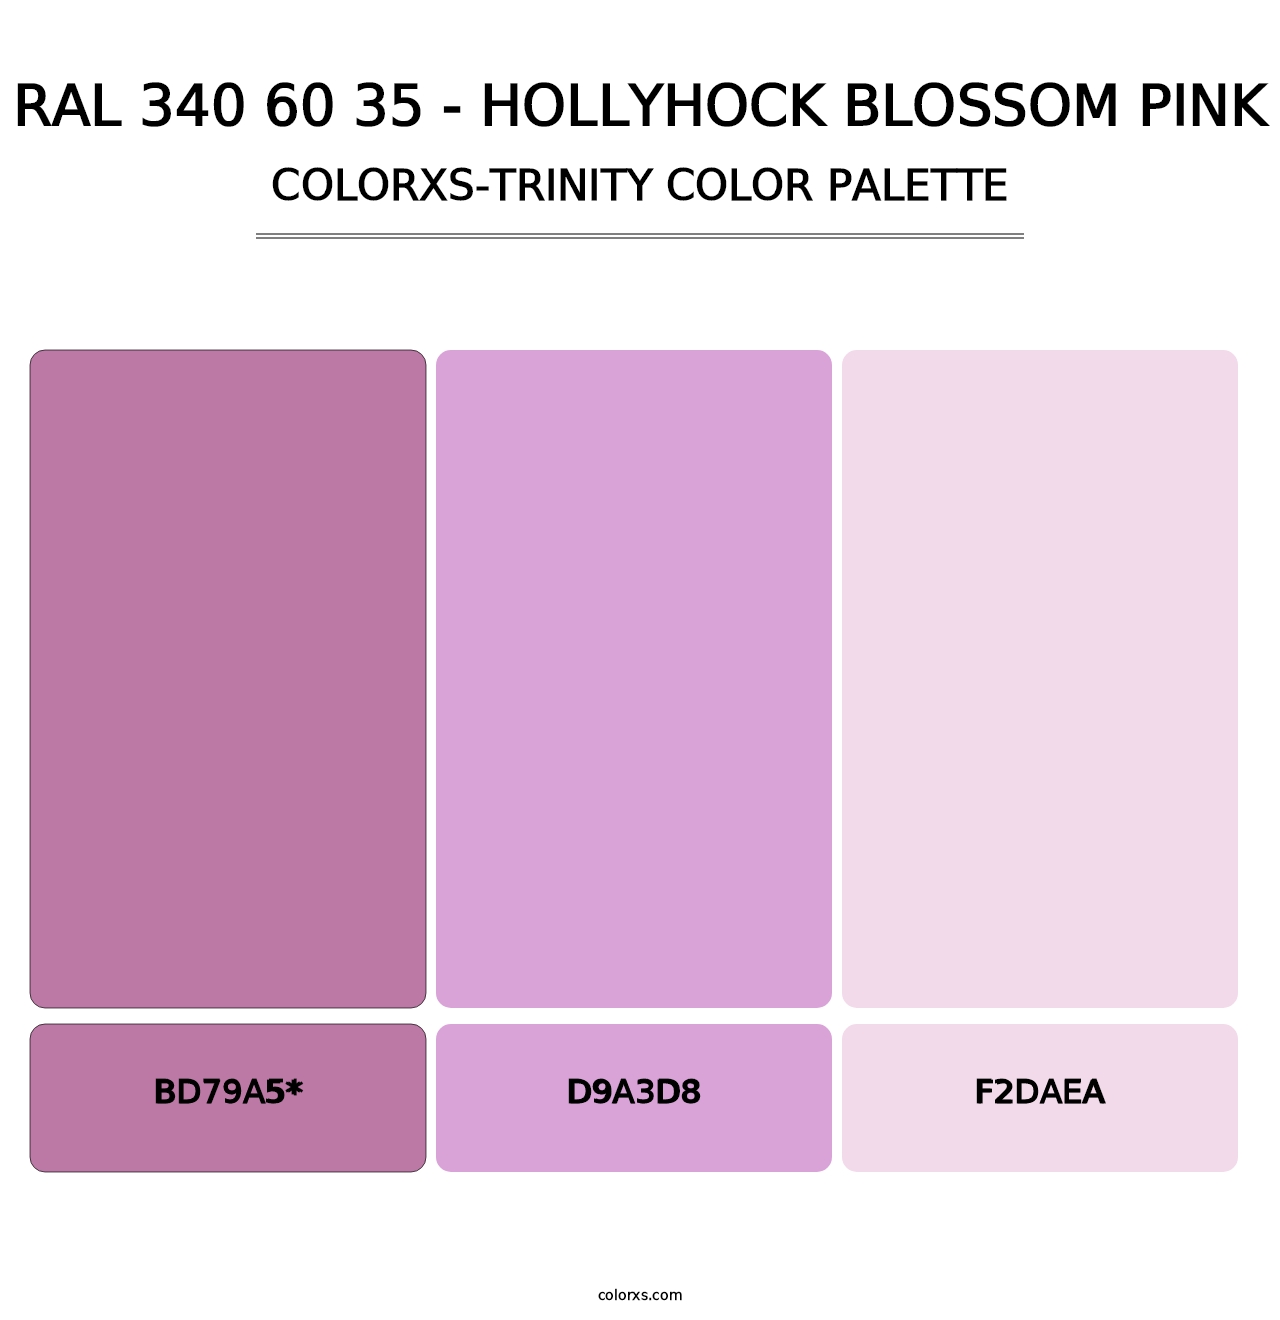 RAL 340 60 35 - Hollyhock Blossom Pink - Colorxs Trinity Palette